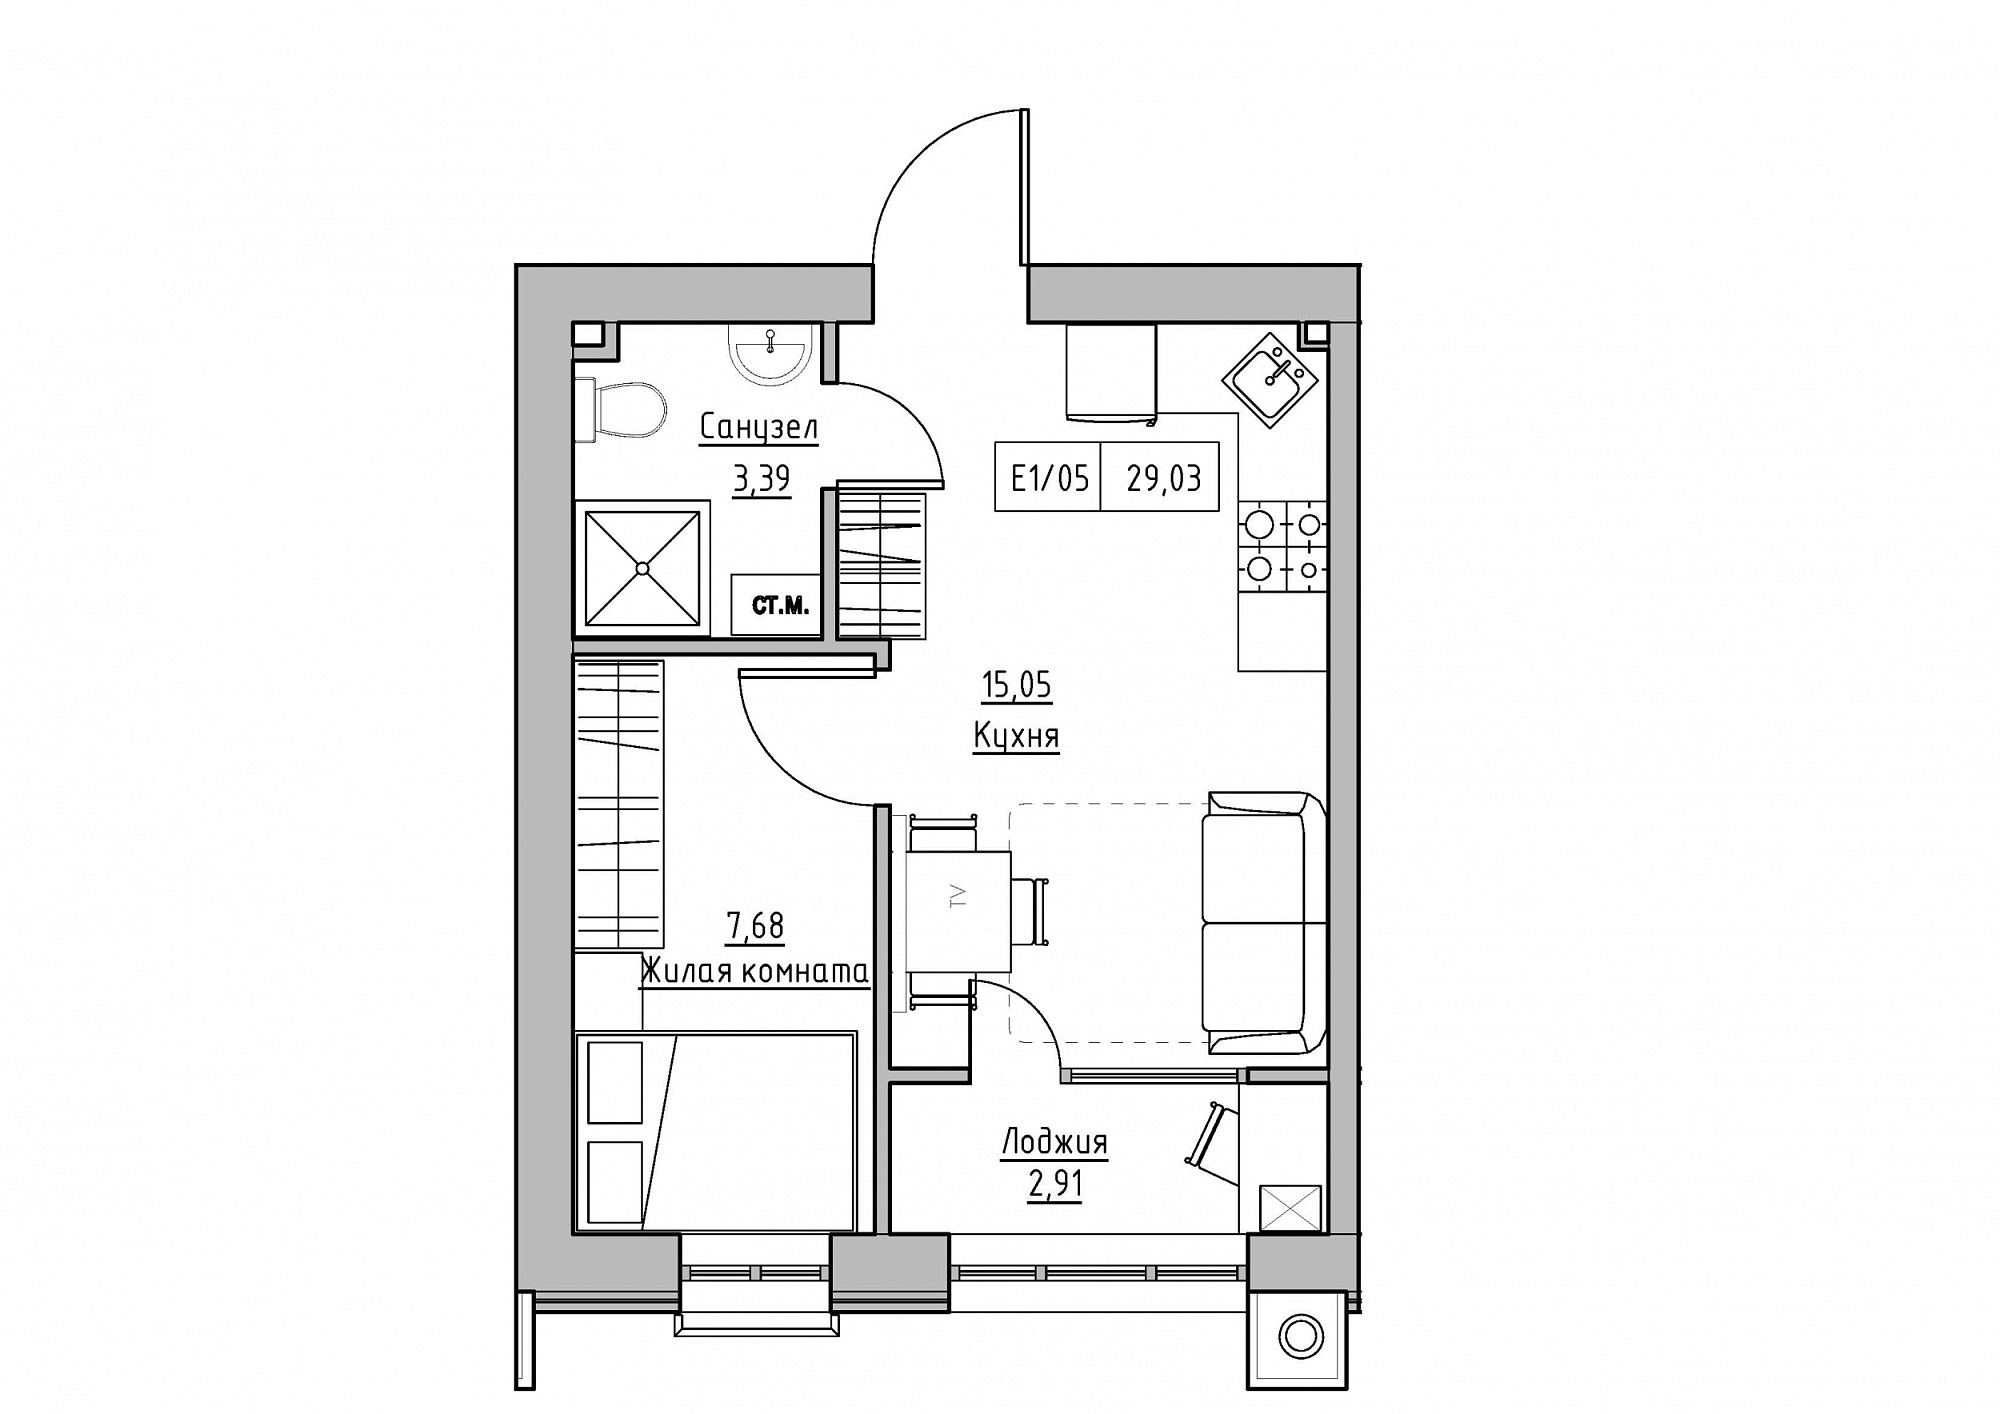 Planning 1-rm flats area 29.03m2, KS-012-02/0007.